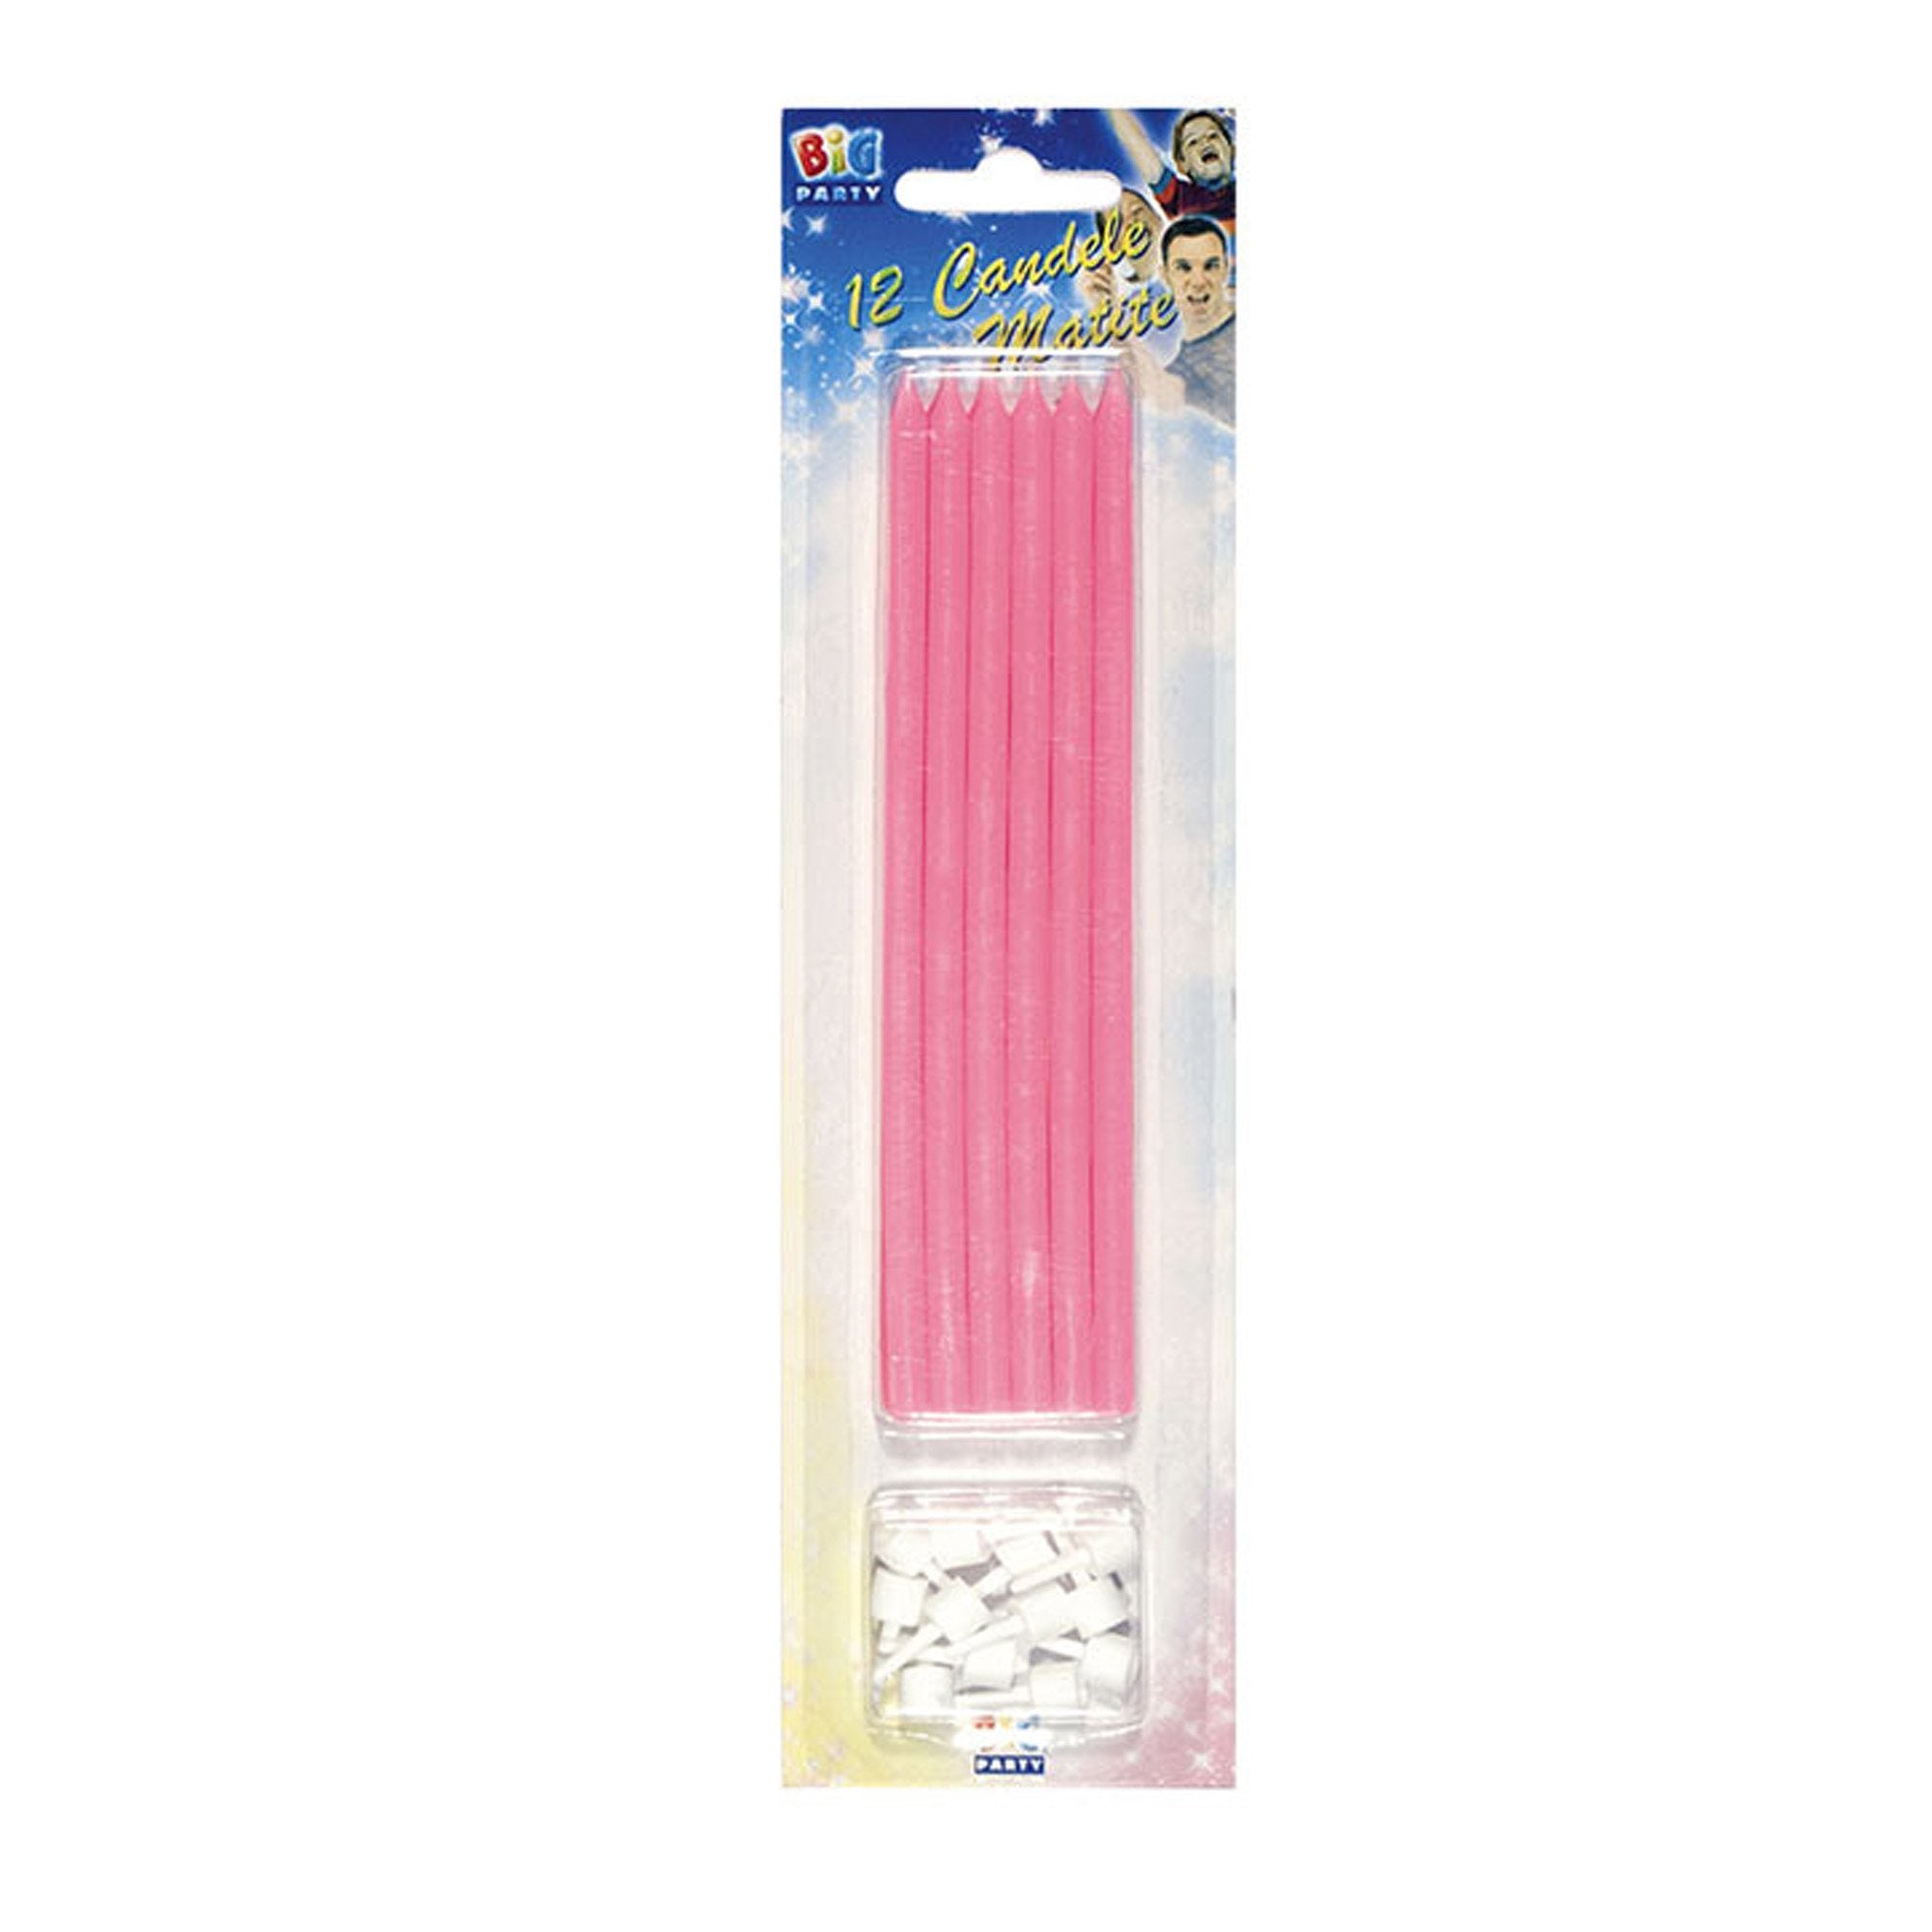 big-party-12-candeline-matite-15cm-rosa